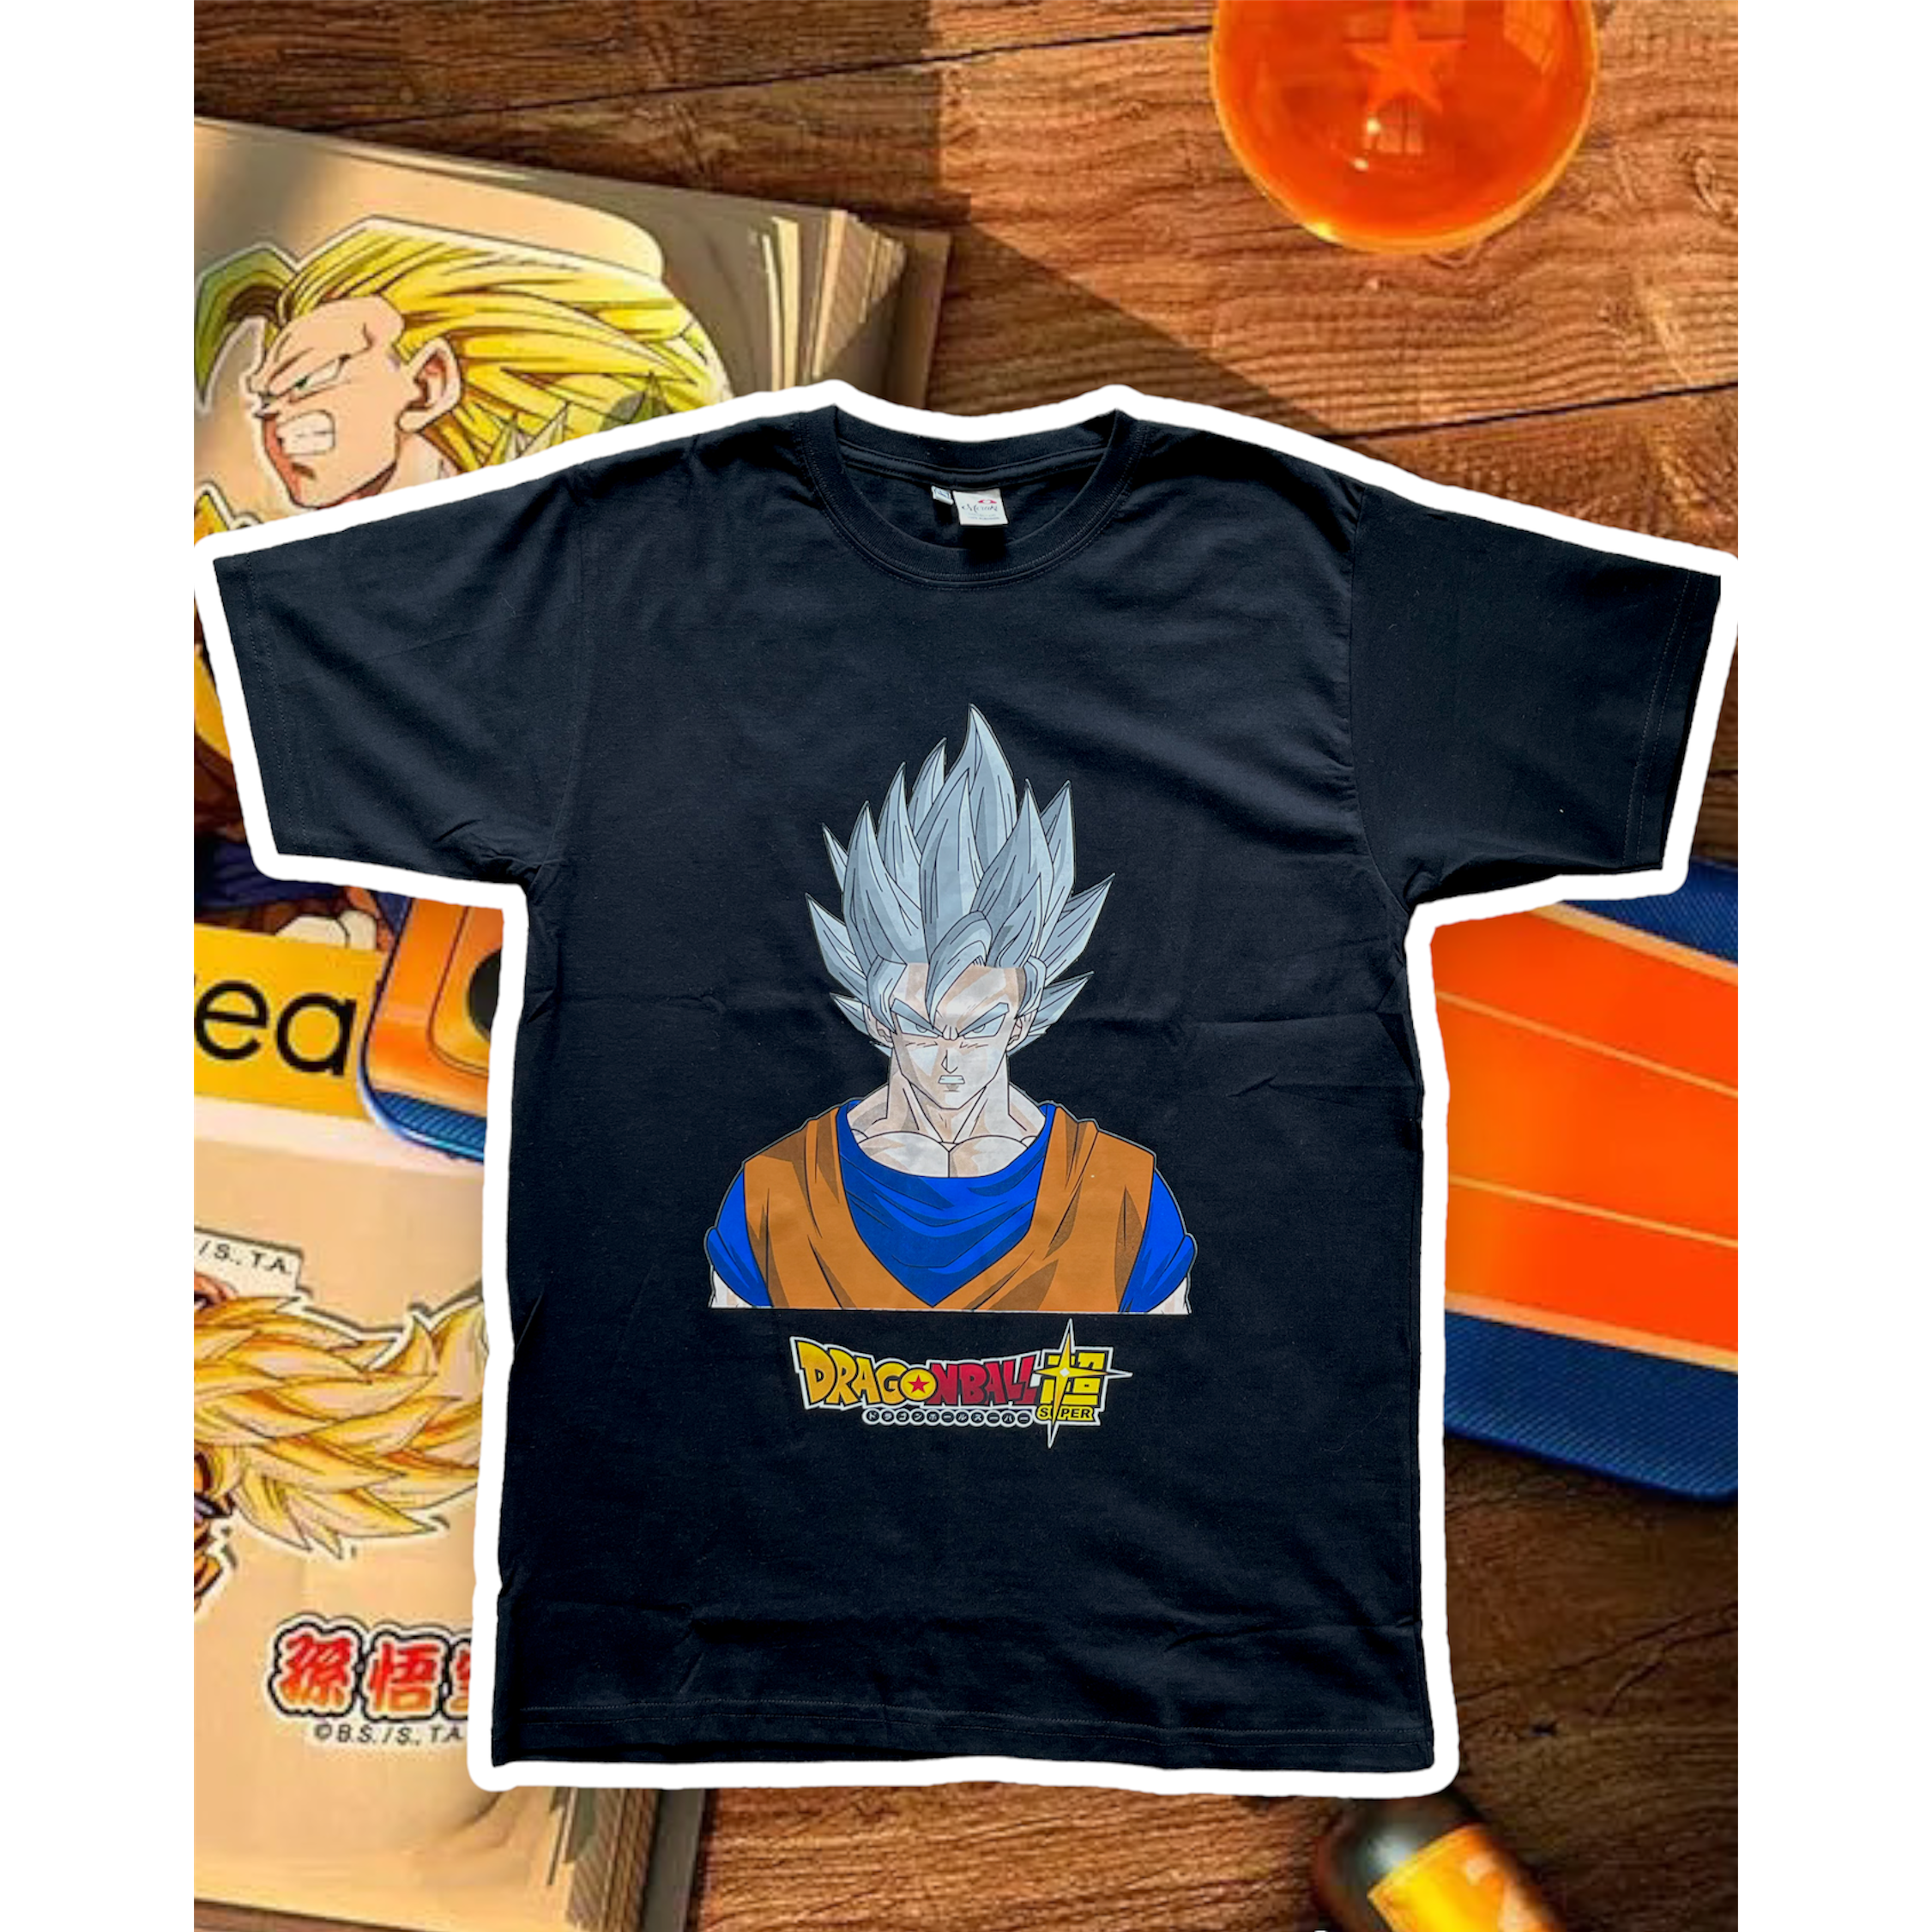 T-shirt modelo Dragon Ball Goku talla L